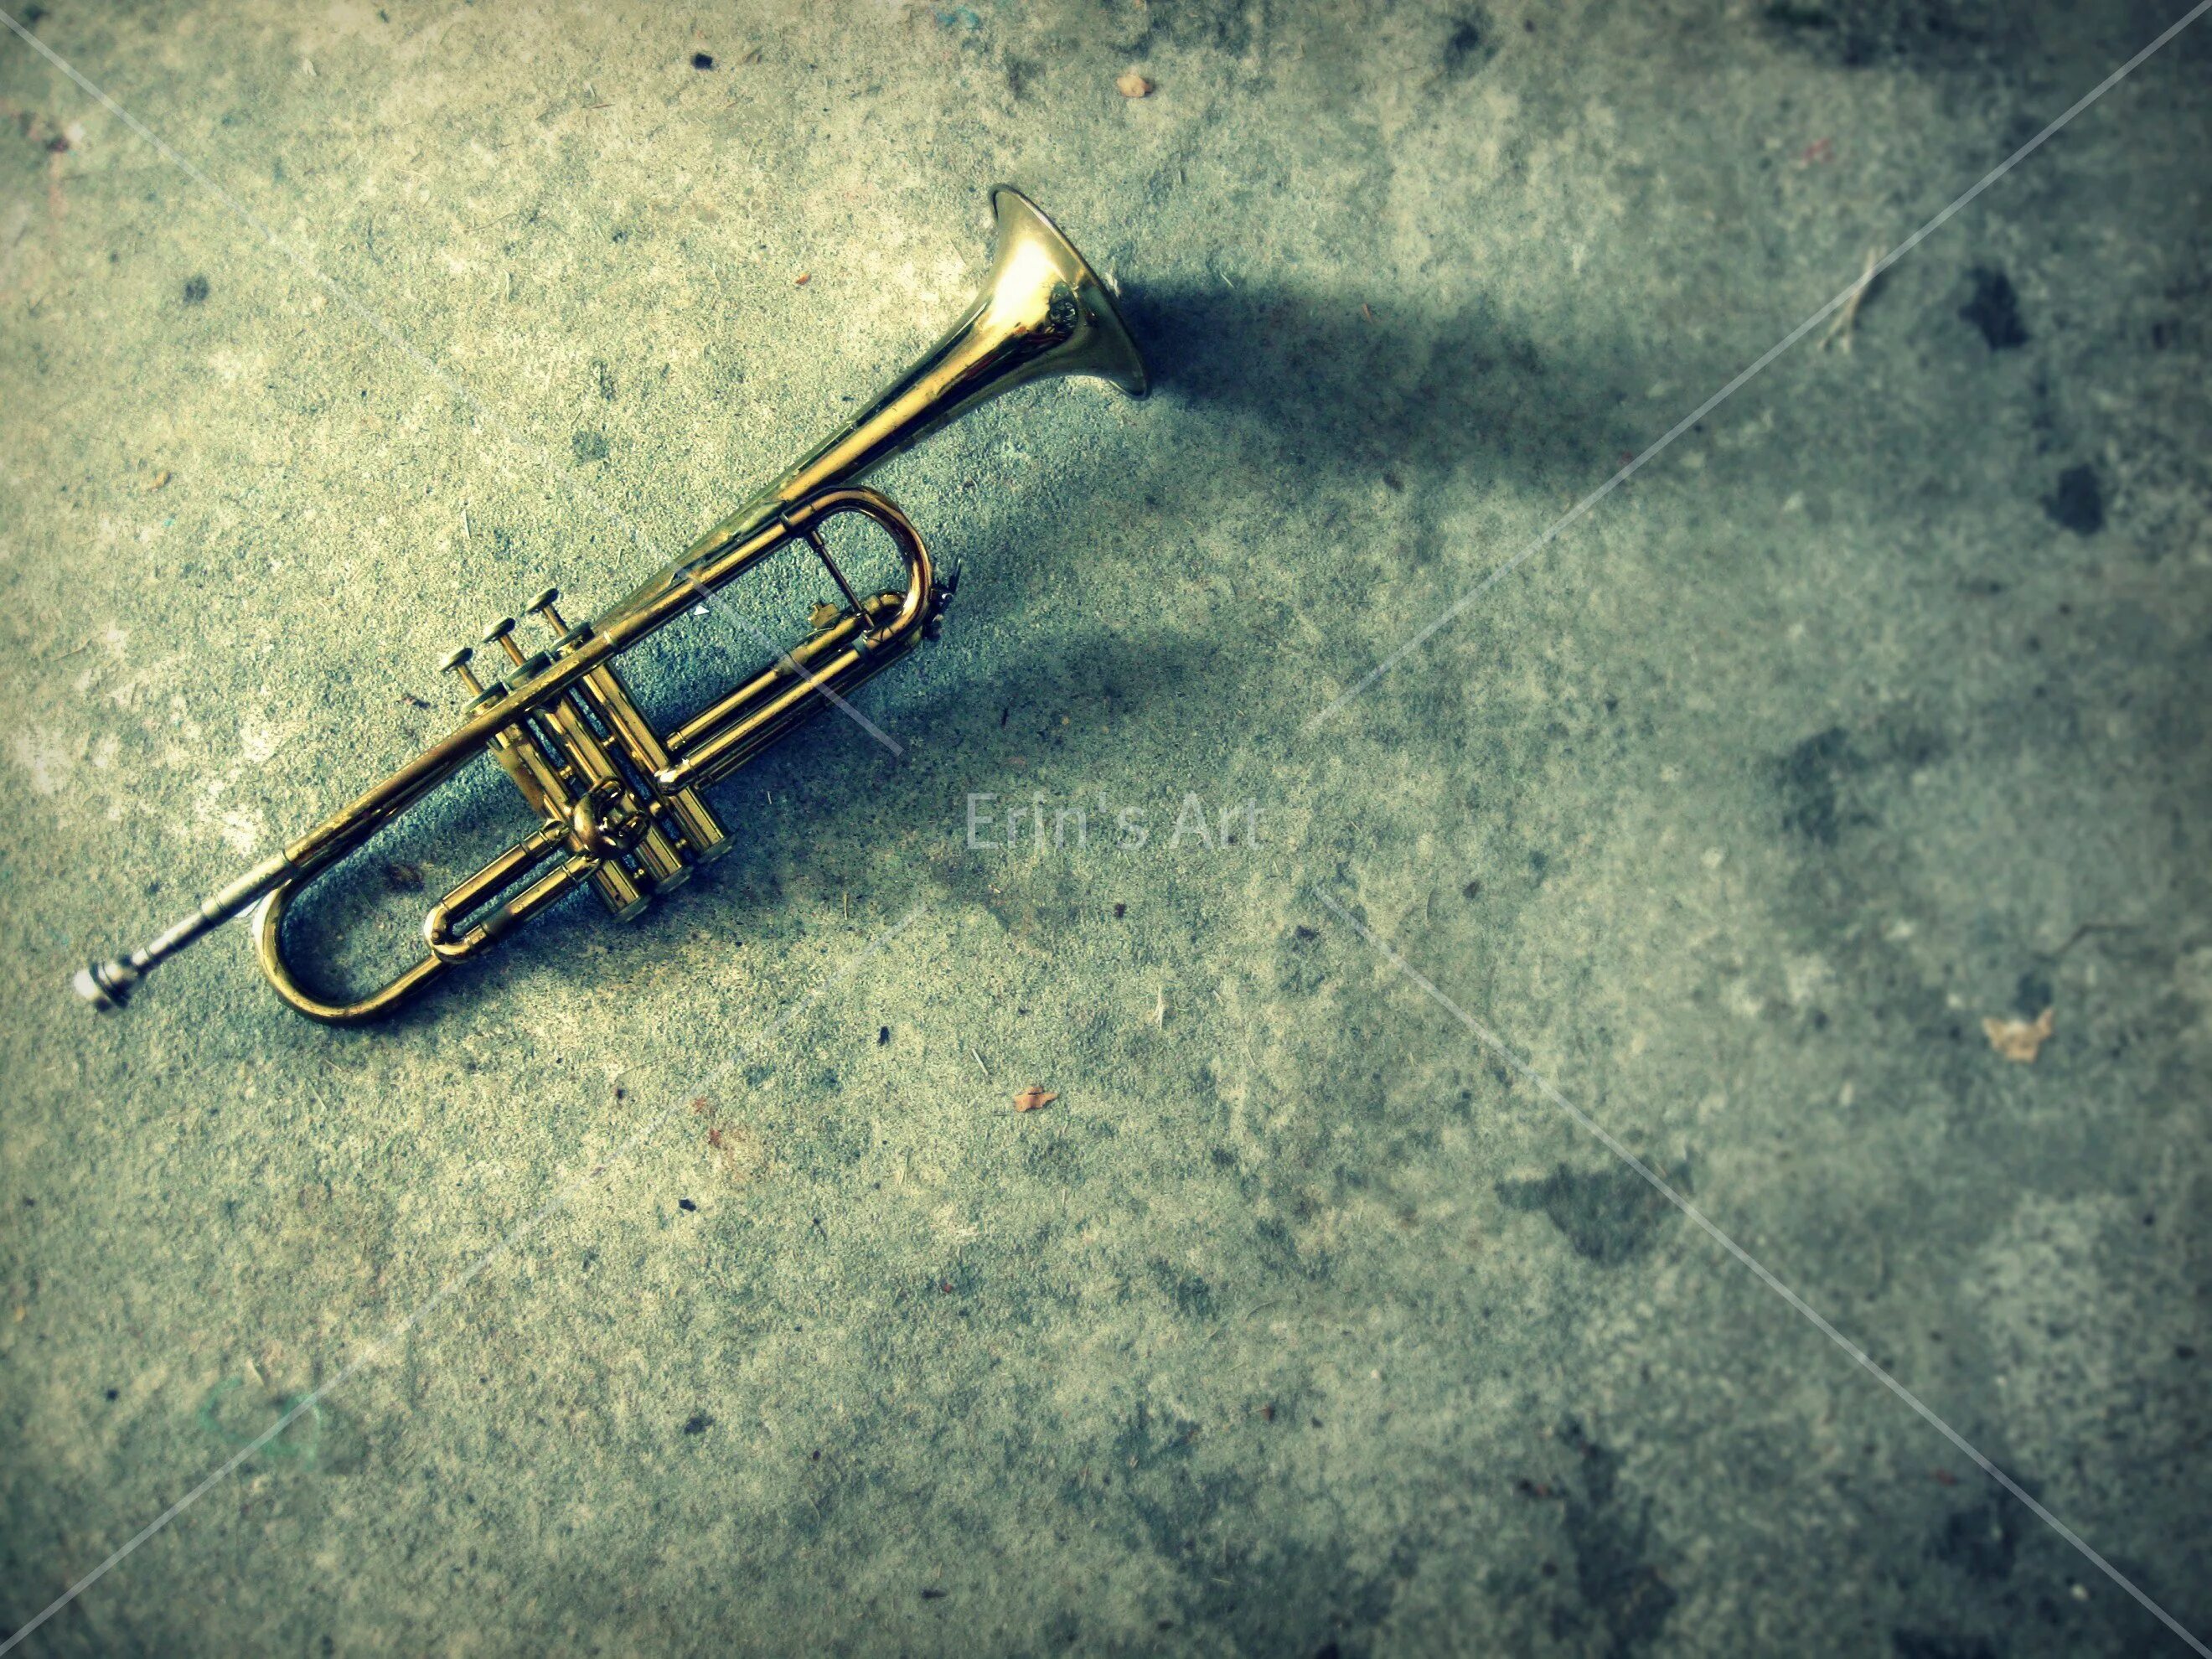 Музыка играет труба. Музыкальная труба. Труба инструмент. Музыкальный инструмент "труба". Музыкальные инструменты фон.